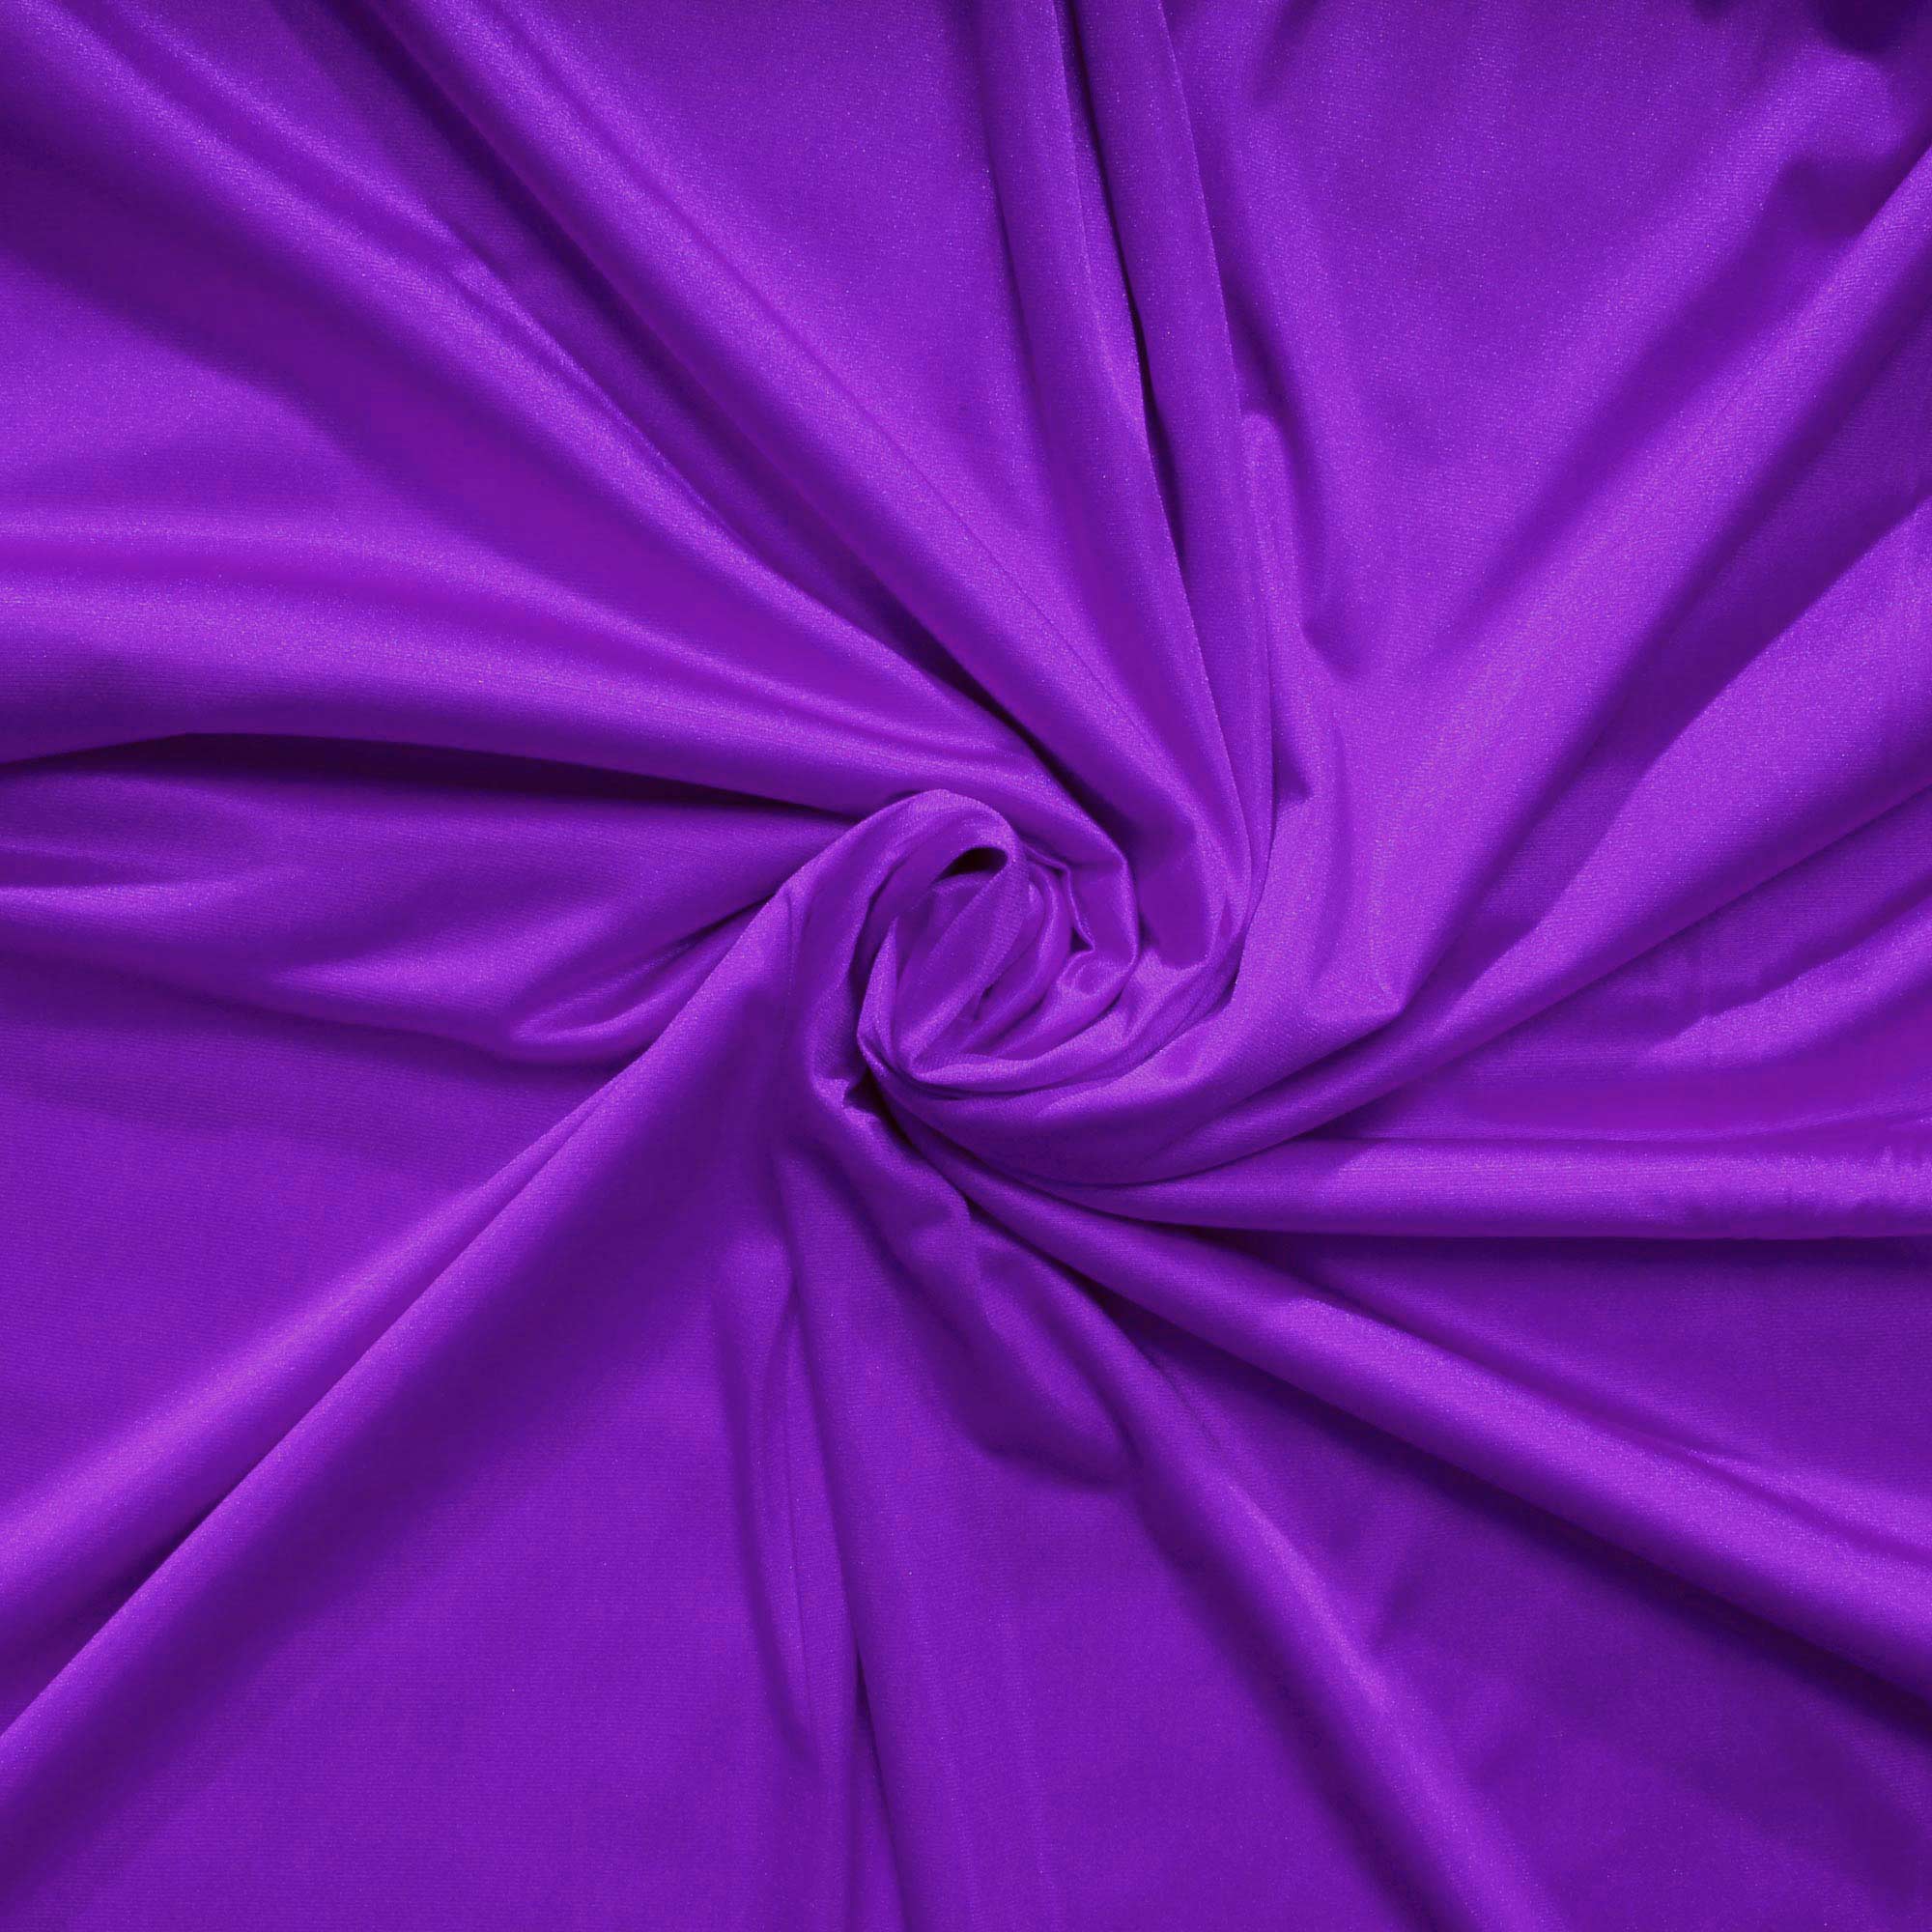 Purple hammock close up